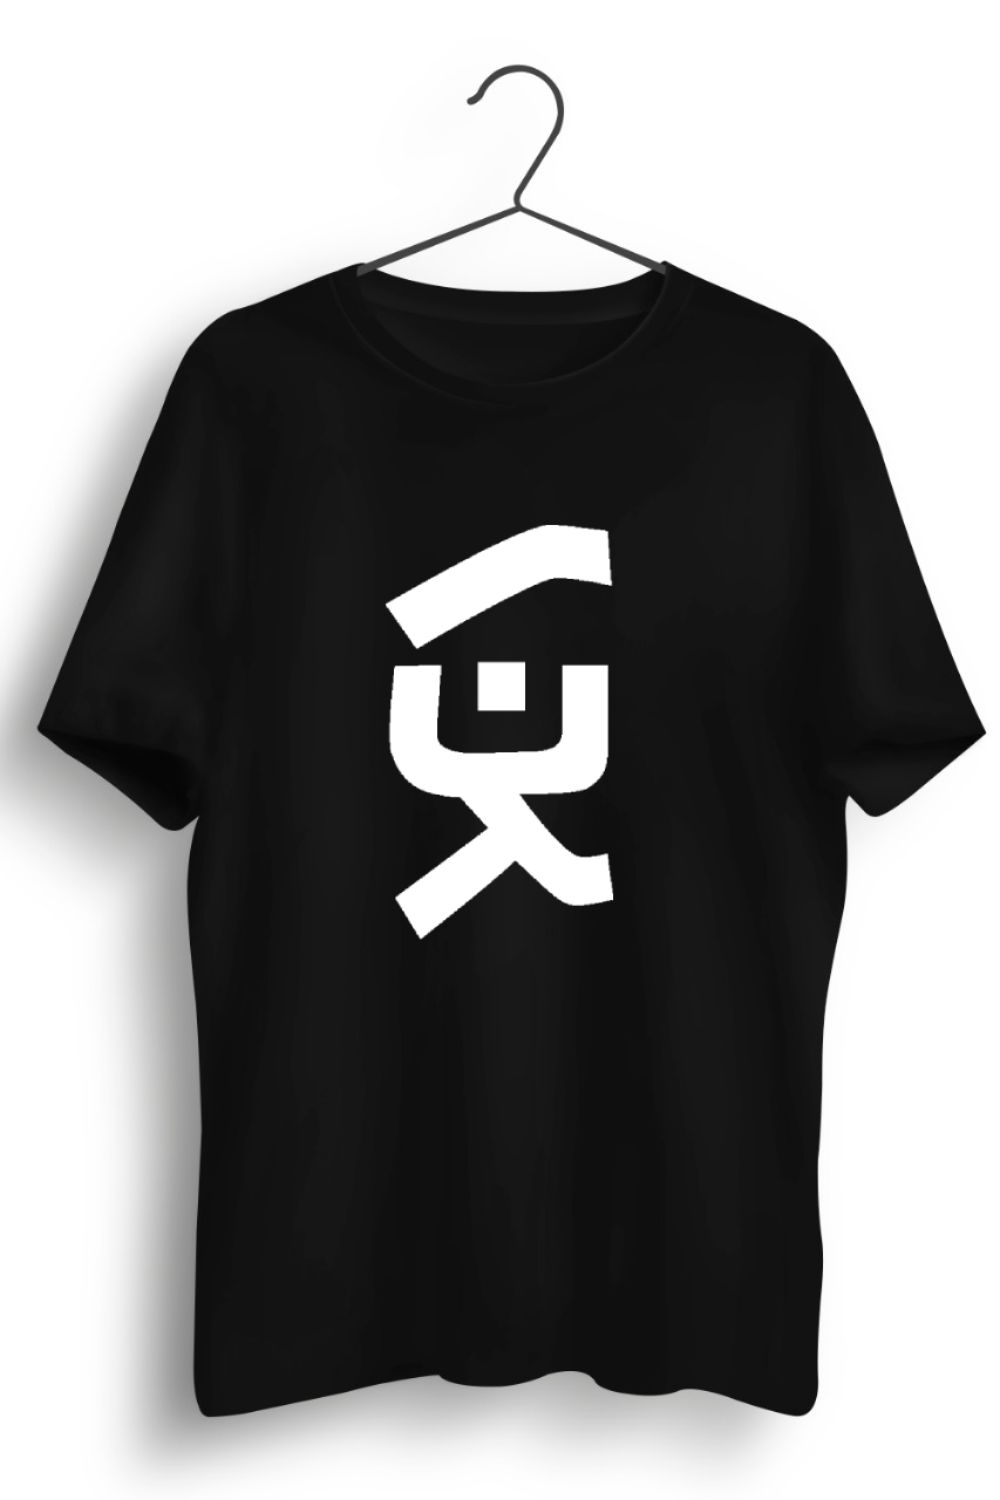 V3K Chest Print Graphic Black Tshirt